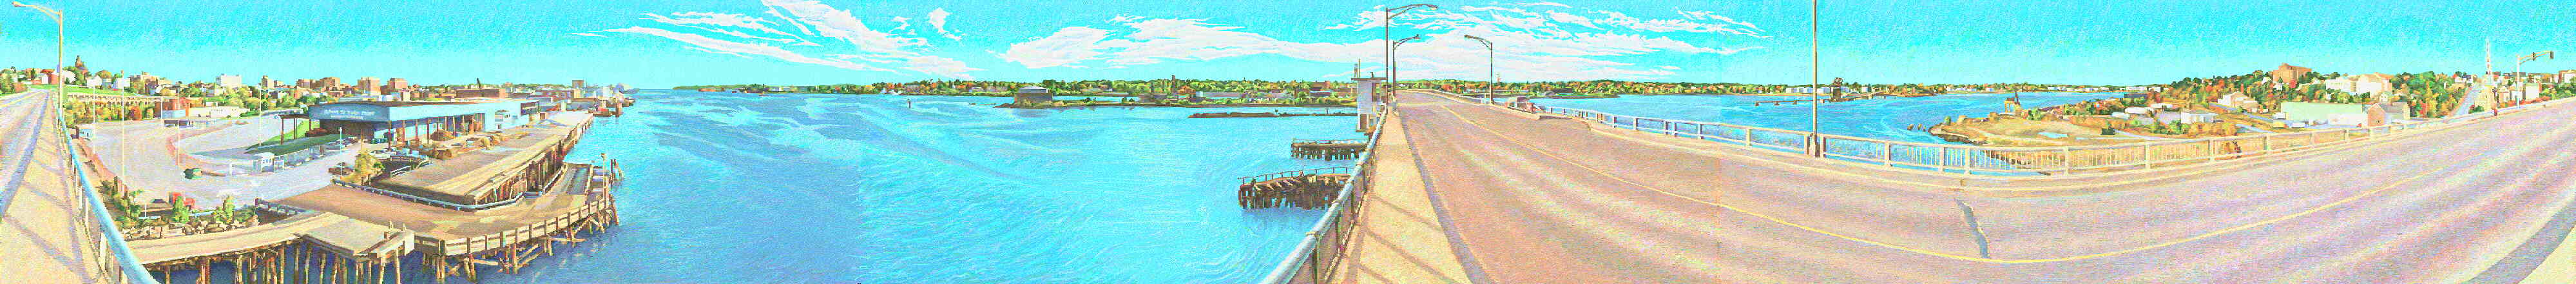 View of Docks from Million Dollar Bridge